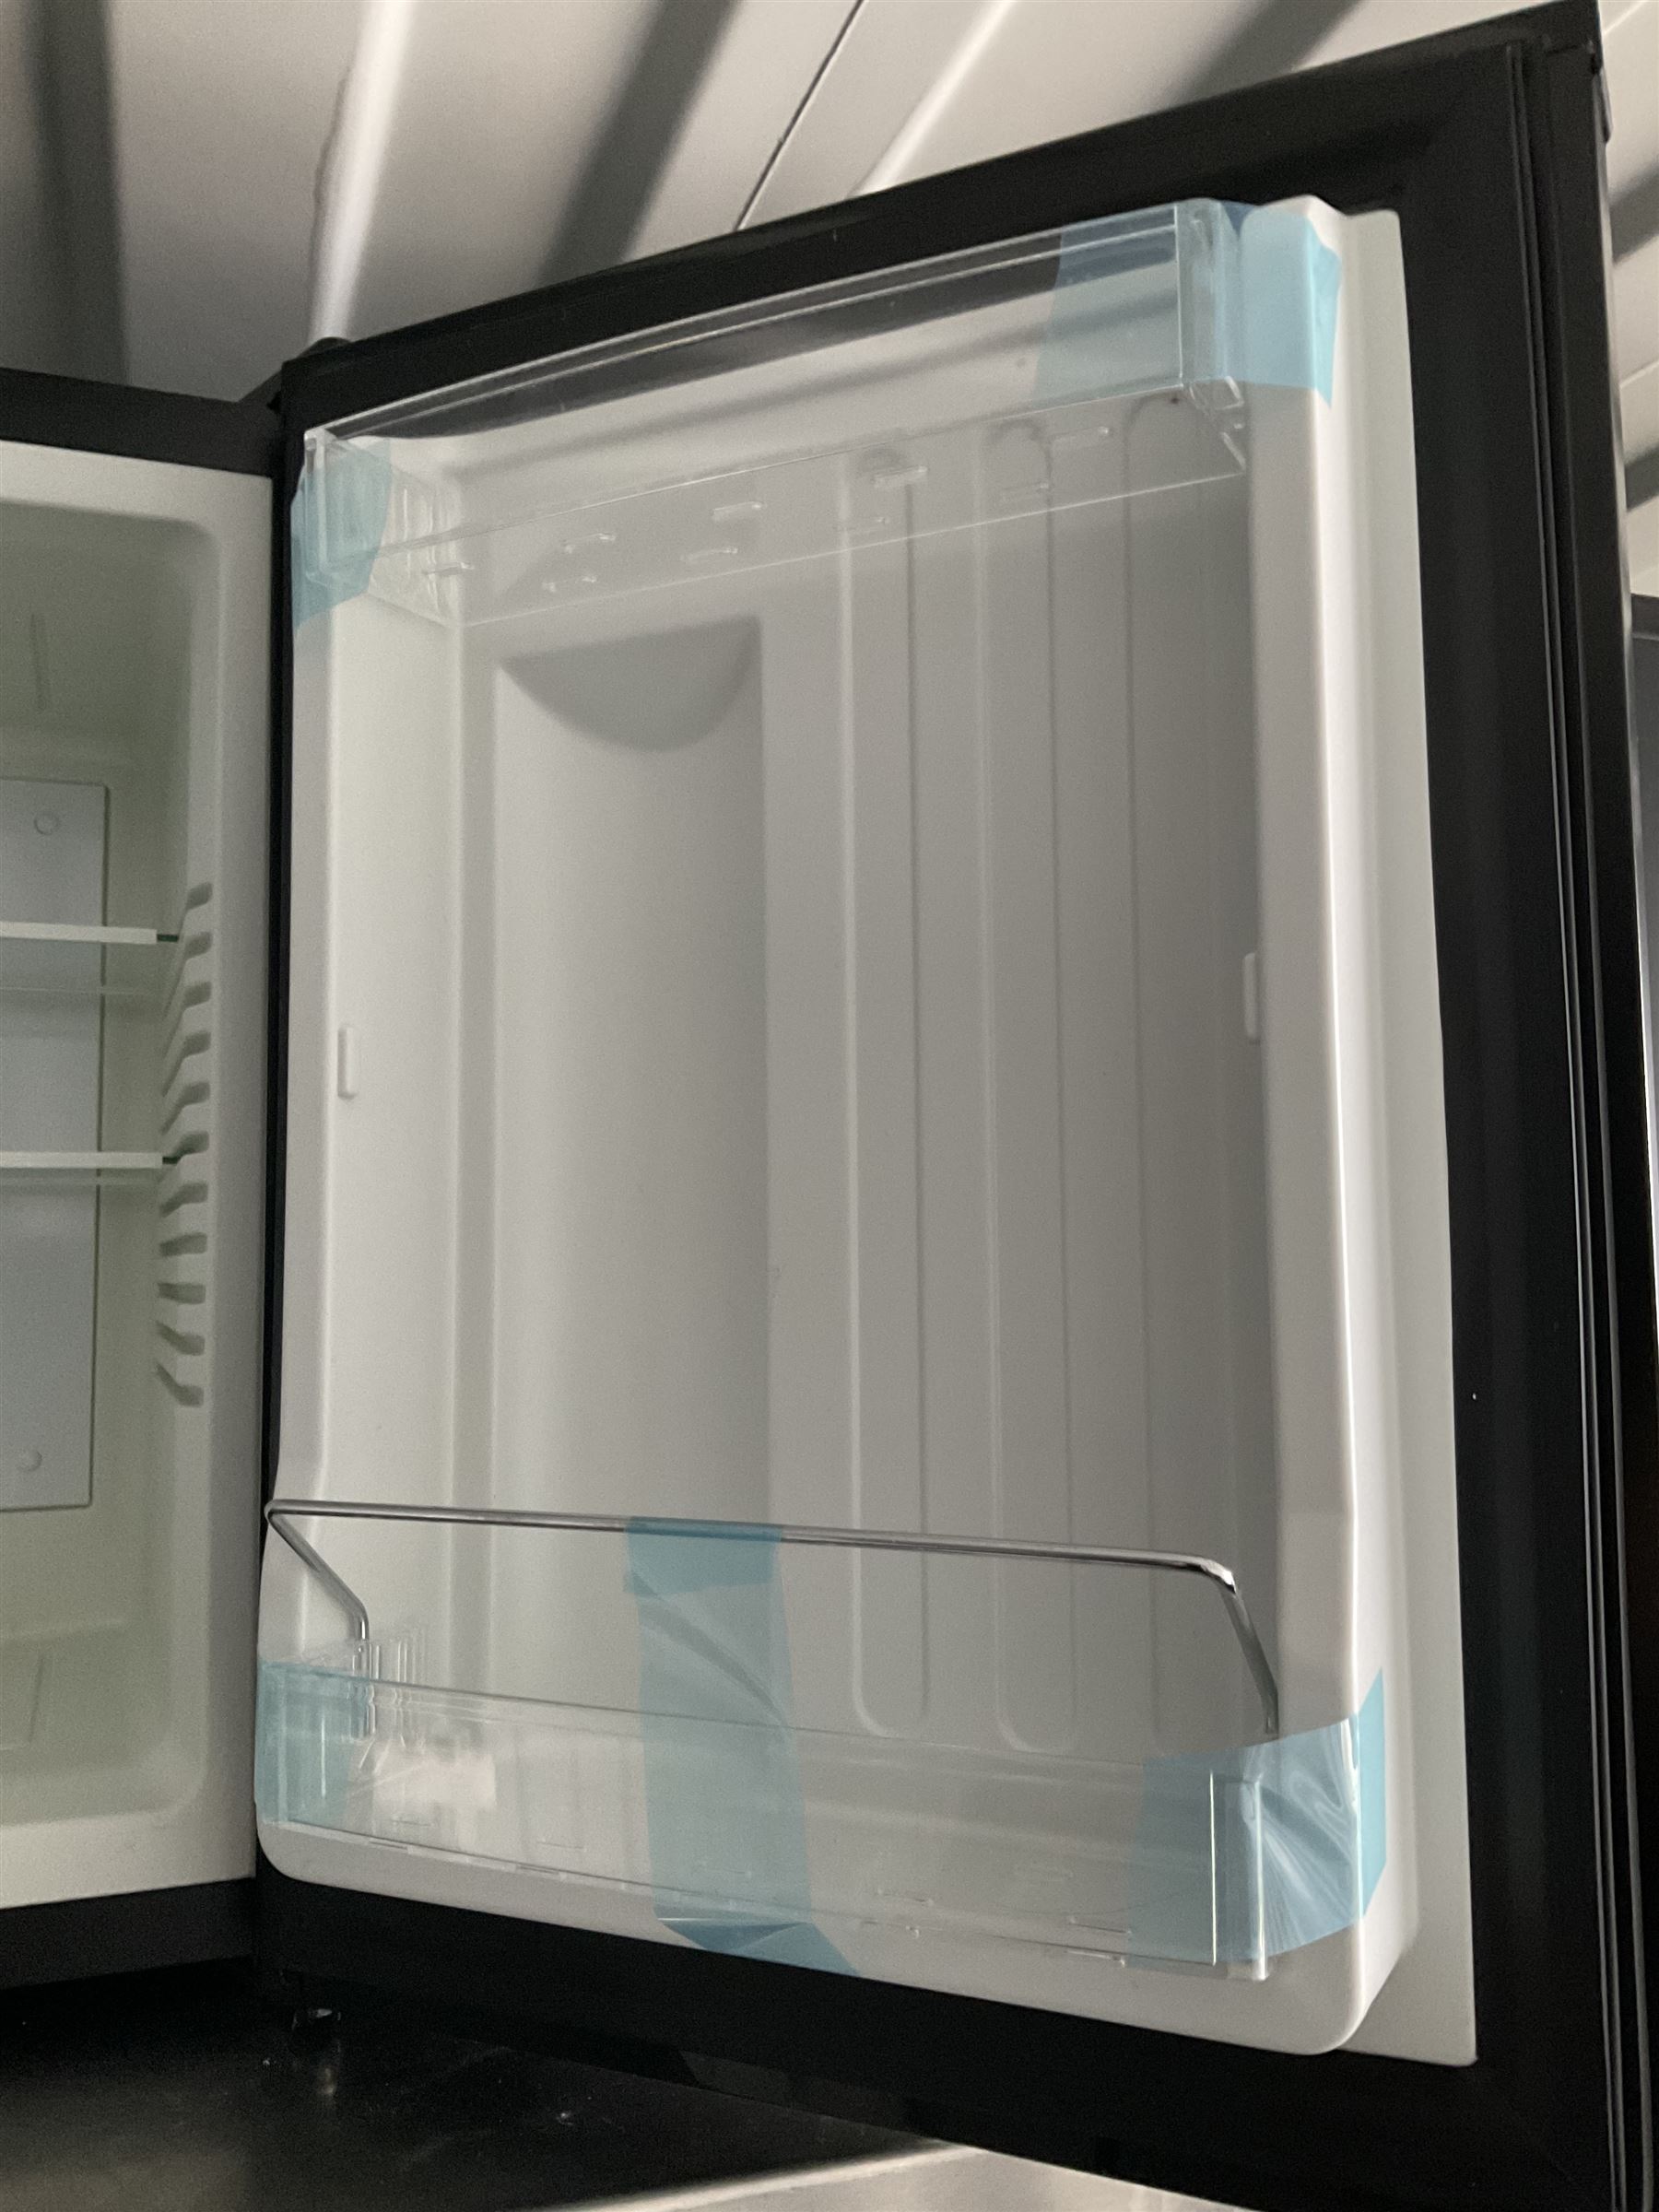 BARCOOL Mini-fridge - Image 3 of 3